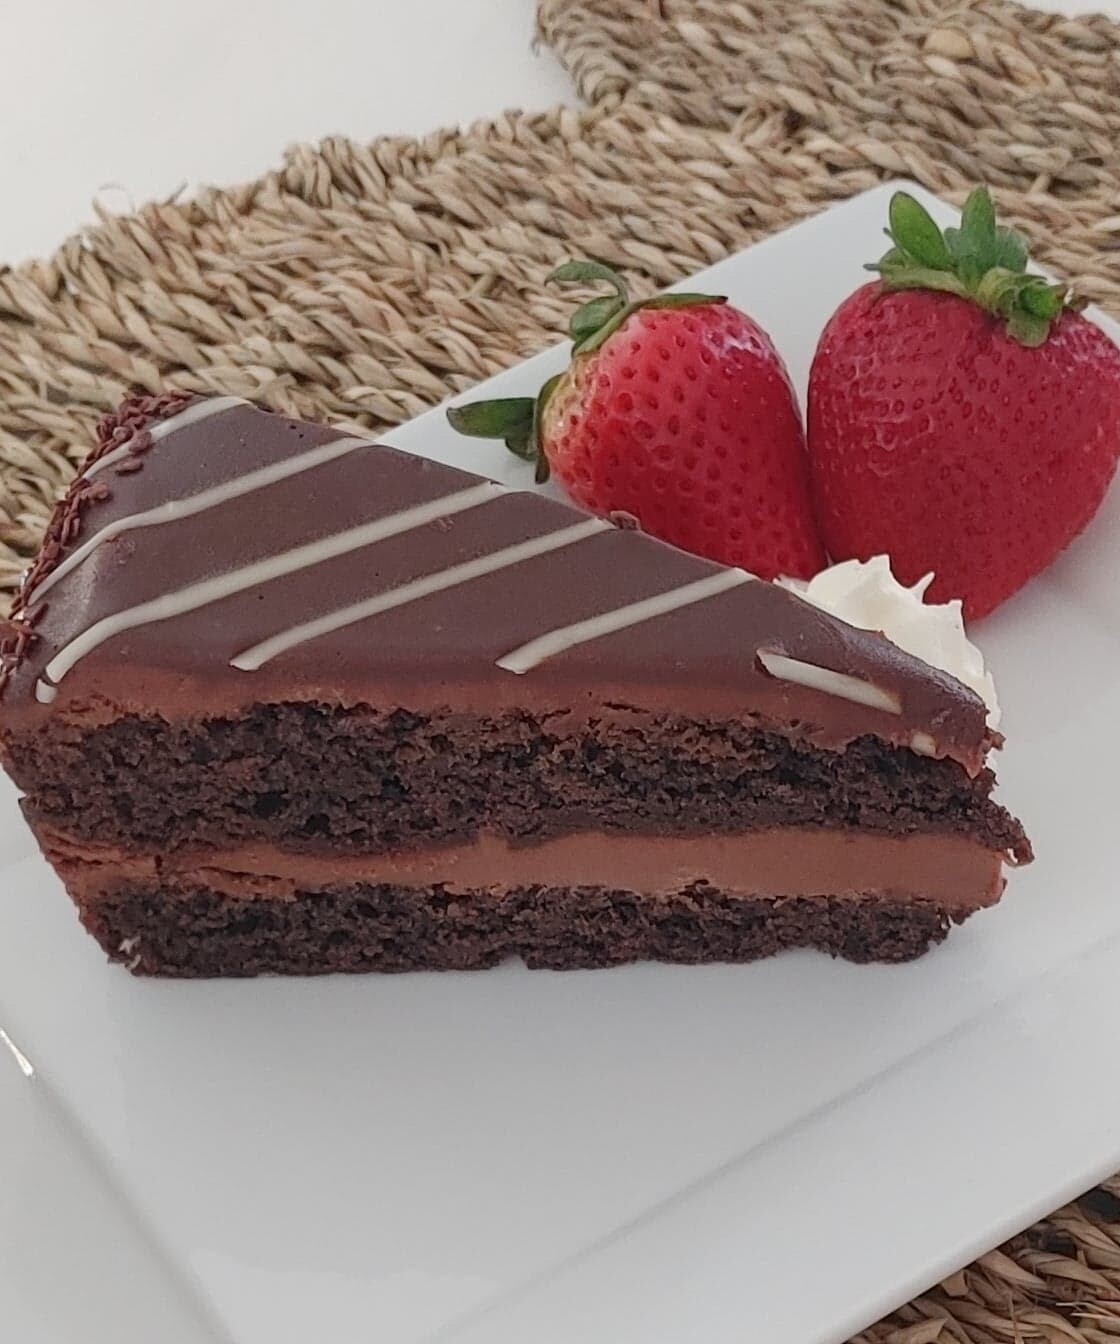 13. Scrumptious Truffle Chocolate Cake